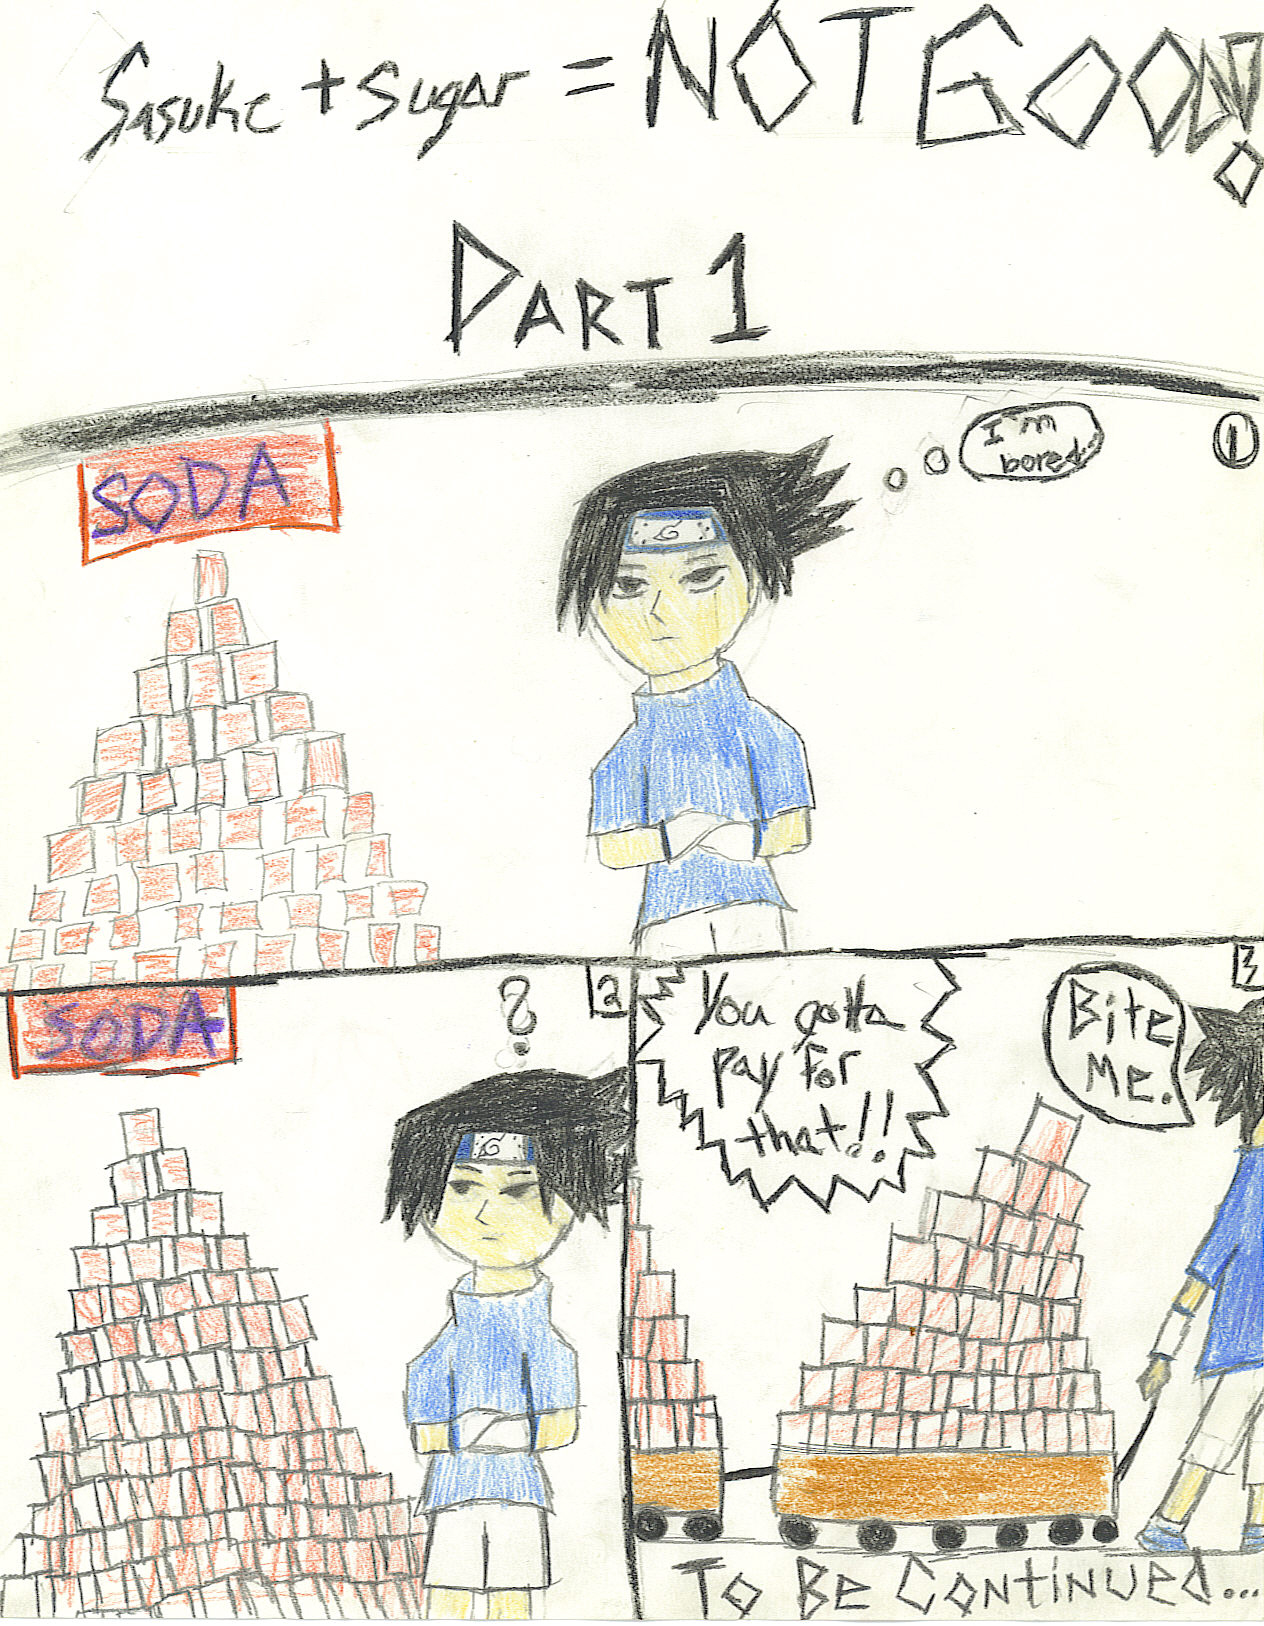 Sasuke + Sugar = NOT GOOD! Pt.1 by IceQueen29